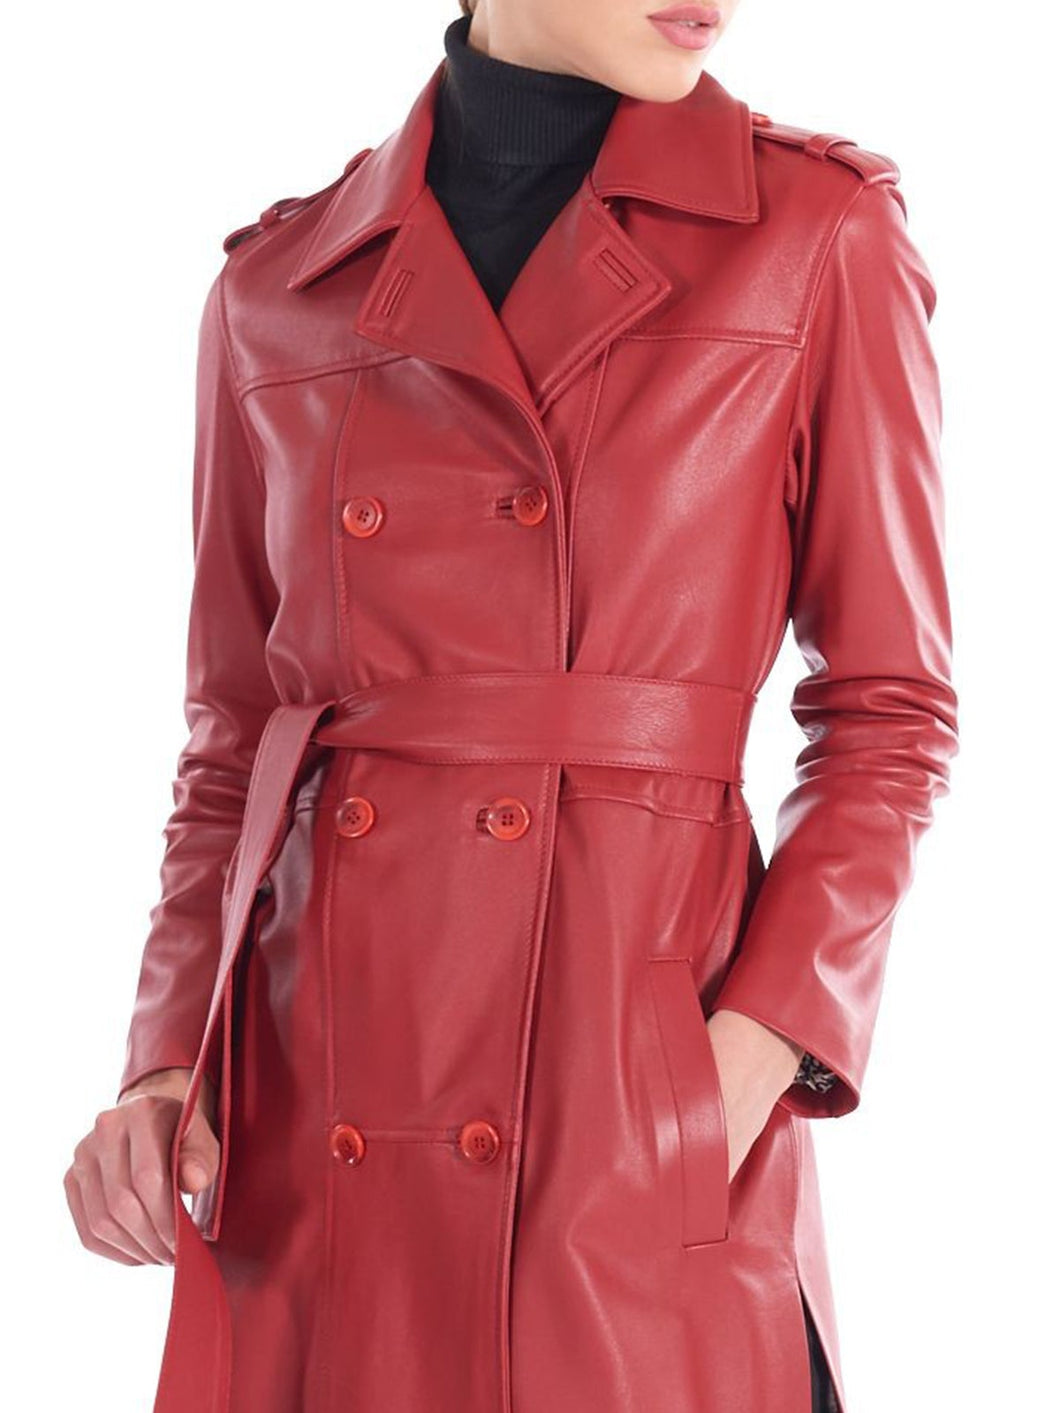 Women's Bomber Hooded Leather Jacket in Red - Boneshia.com